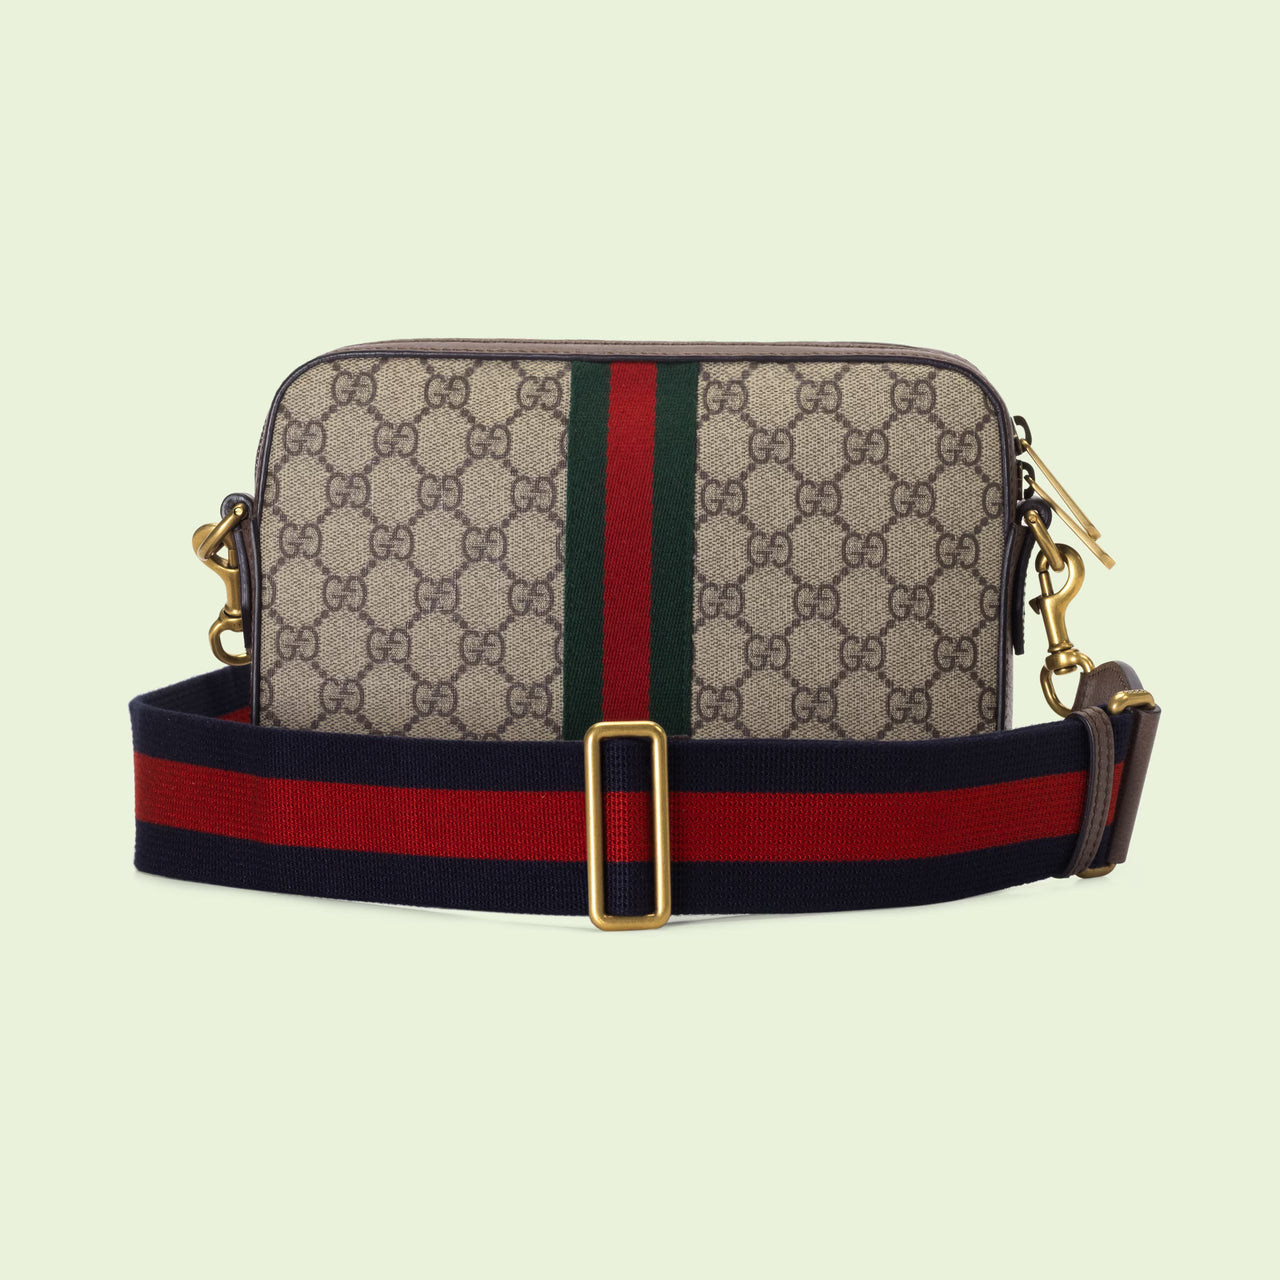 Gucci Ophidia GG Shoulder Bag  (Beige & Ebony)